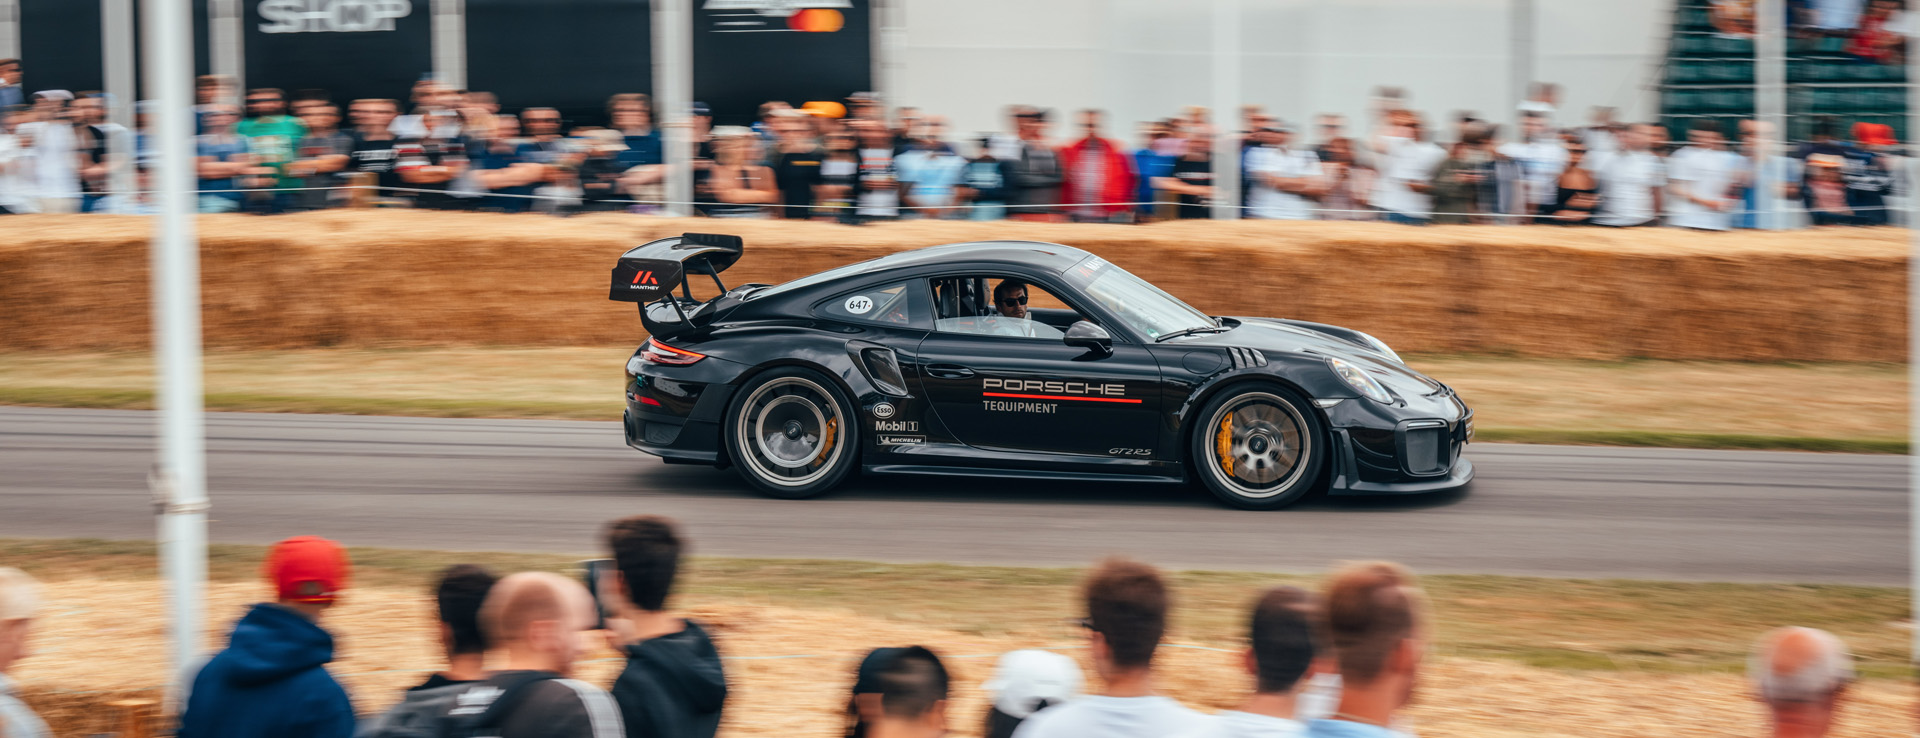 Porsche GT2 RS speeding past crowds at Goodwood track